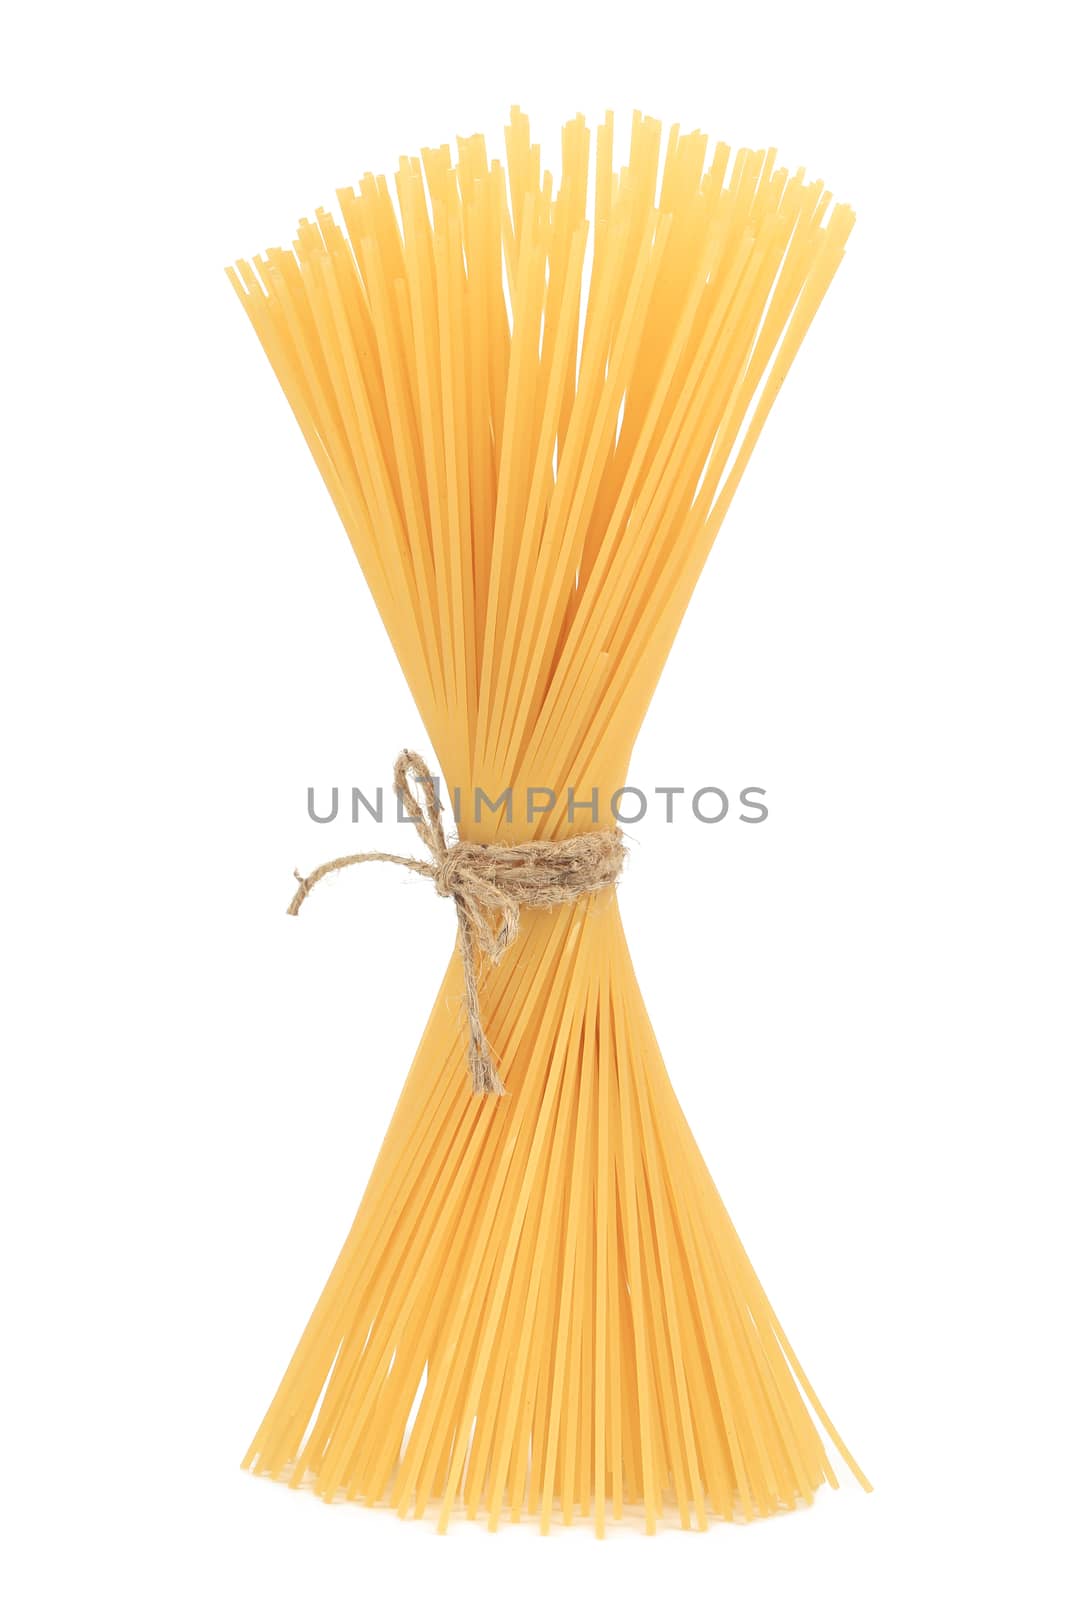 Close up of spaghetti. by indigolotos